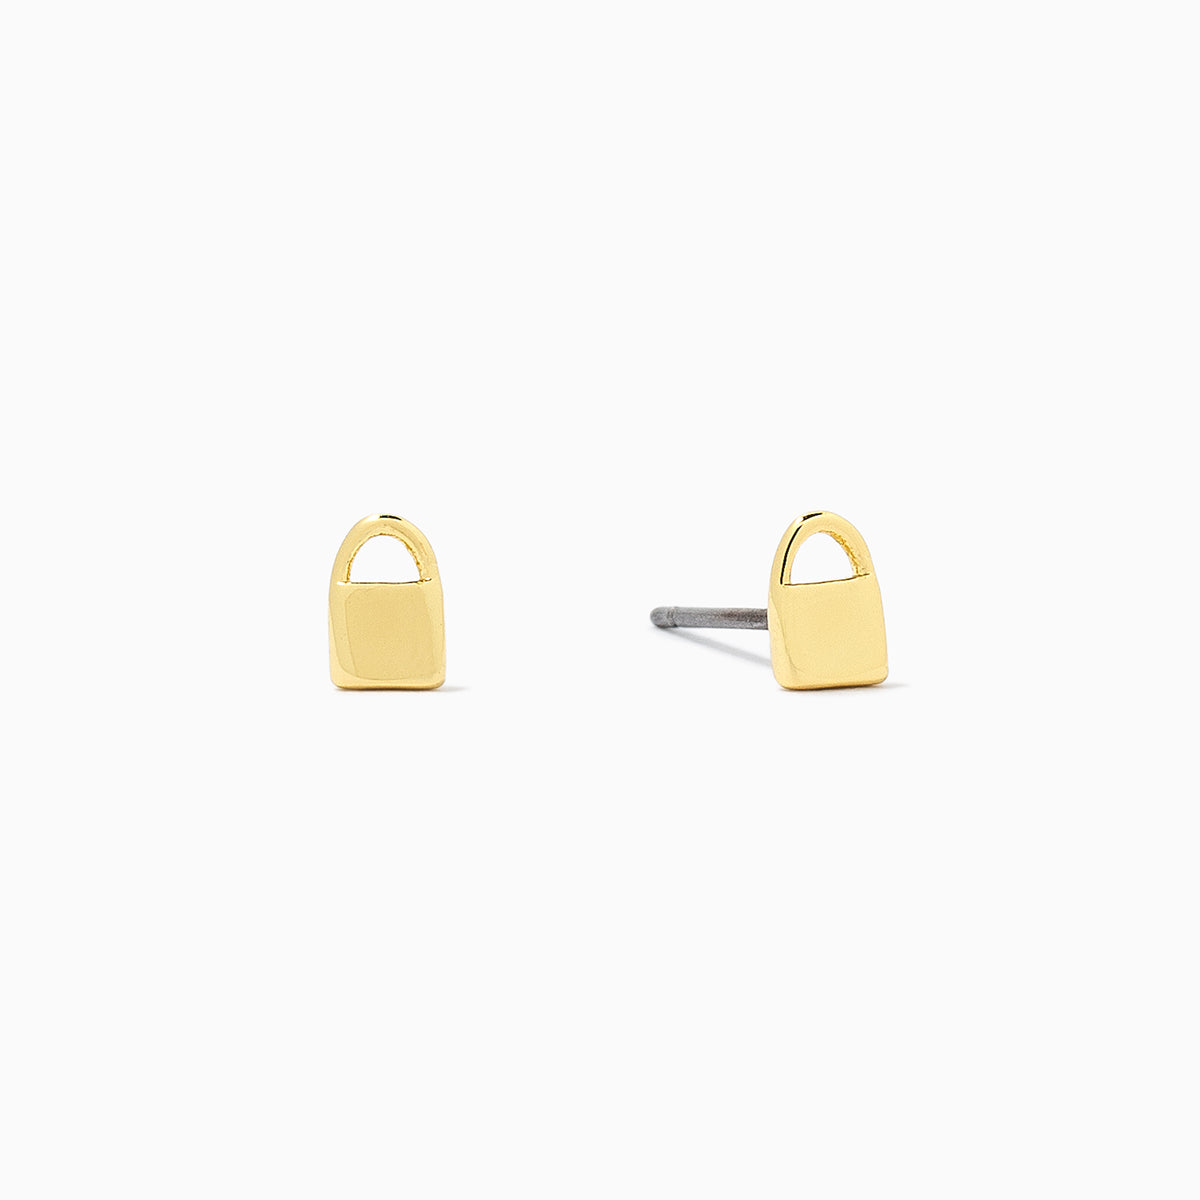 Lock Stud Earrings | Gold | Product Image | Uncommon James